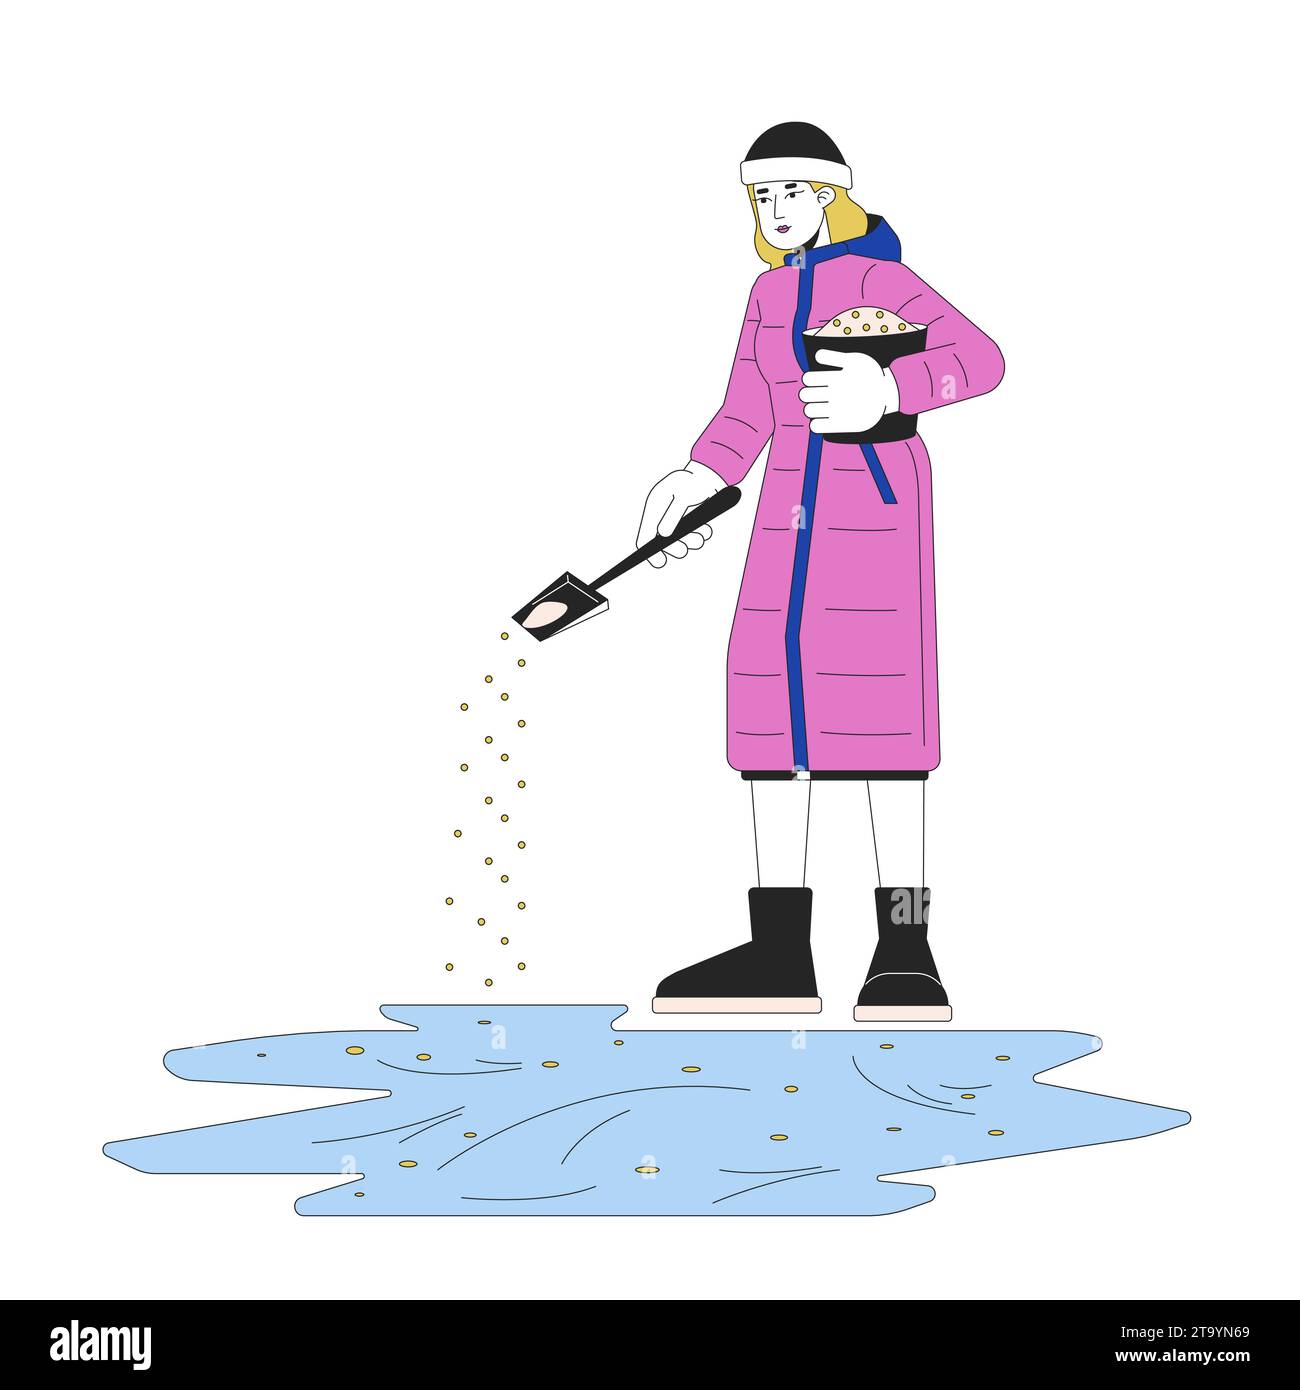 Icy walkway prevention line cartoon flat illustration Stock Vector